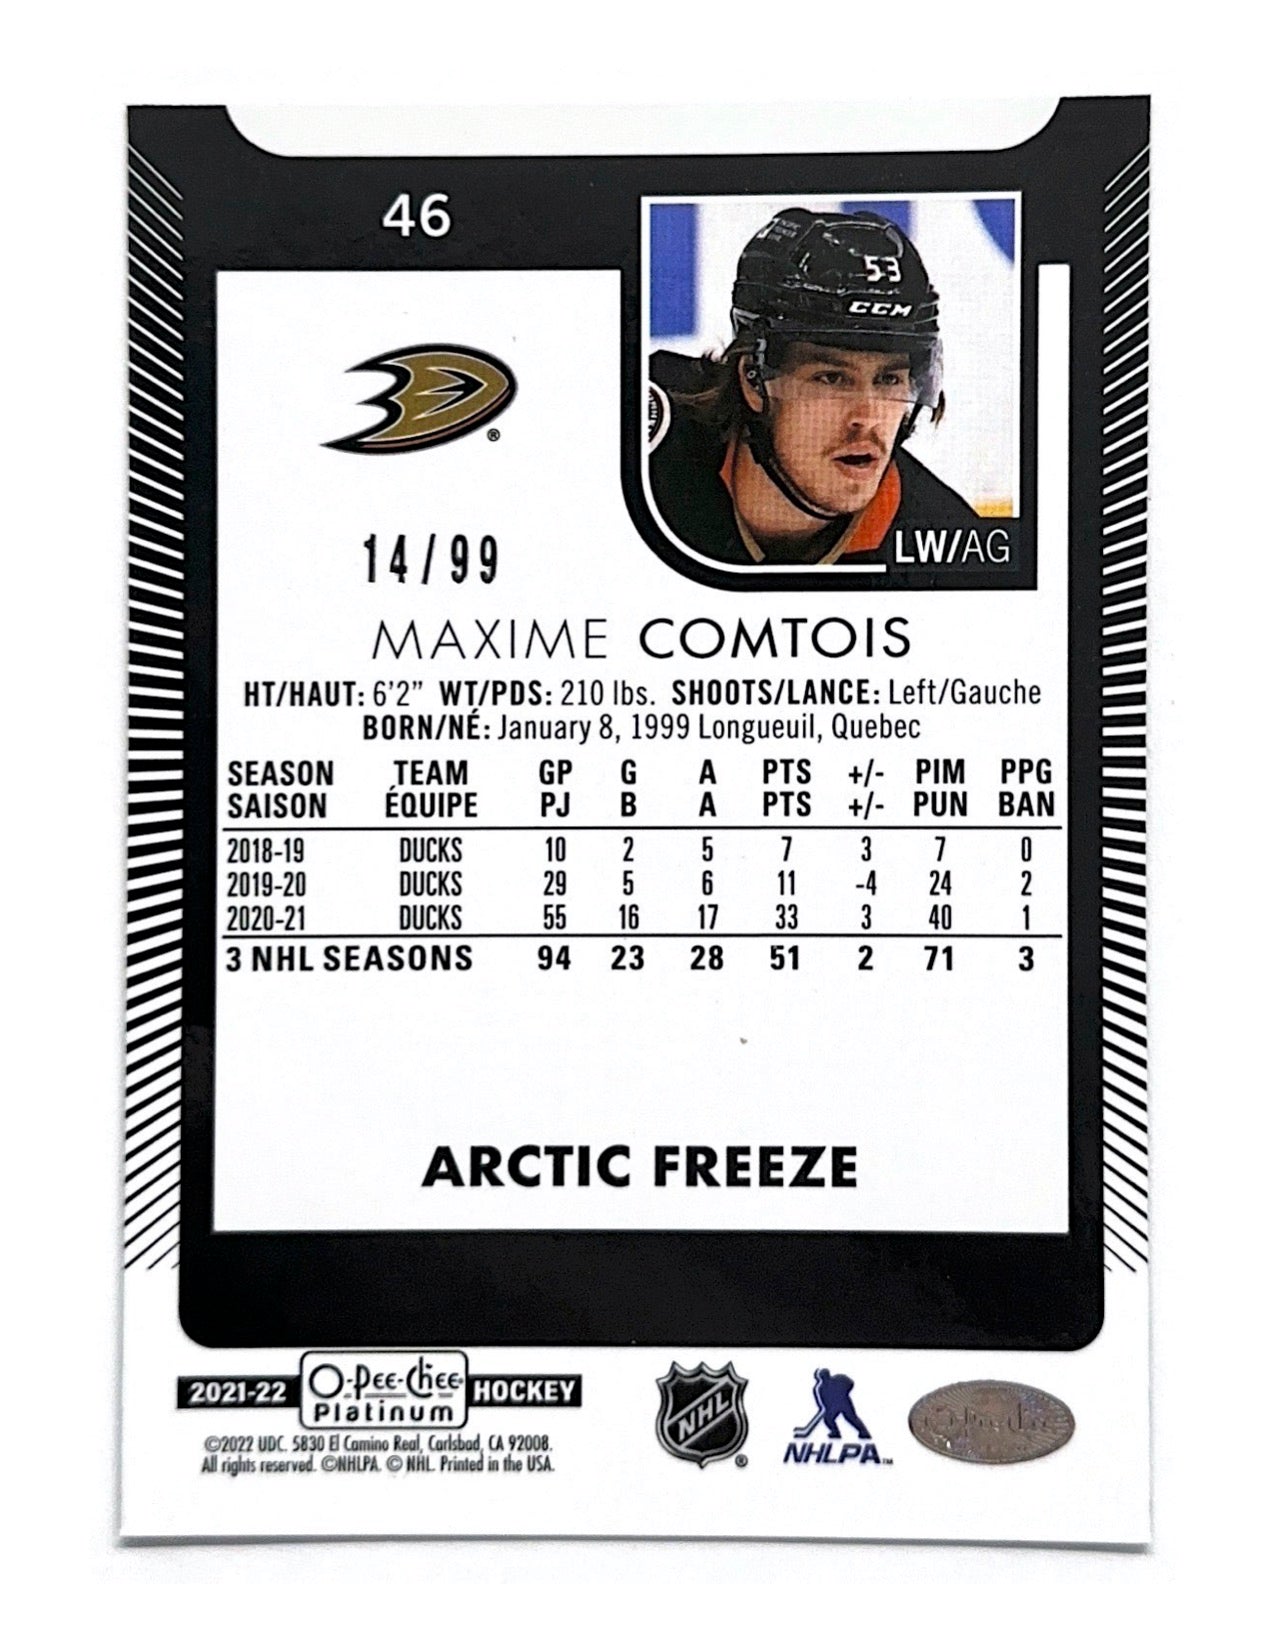 Maxime Comtois 2021-22 O-Pee-Chee Platinum Arctic Freeze #46 - 14/99